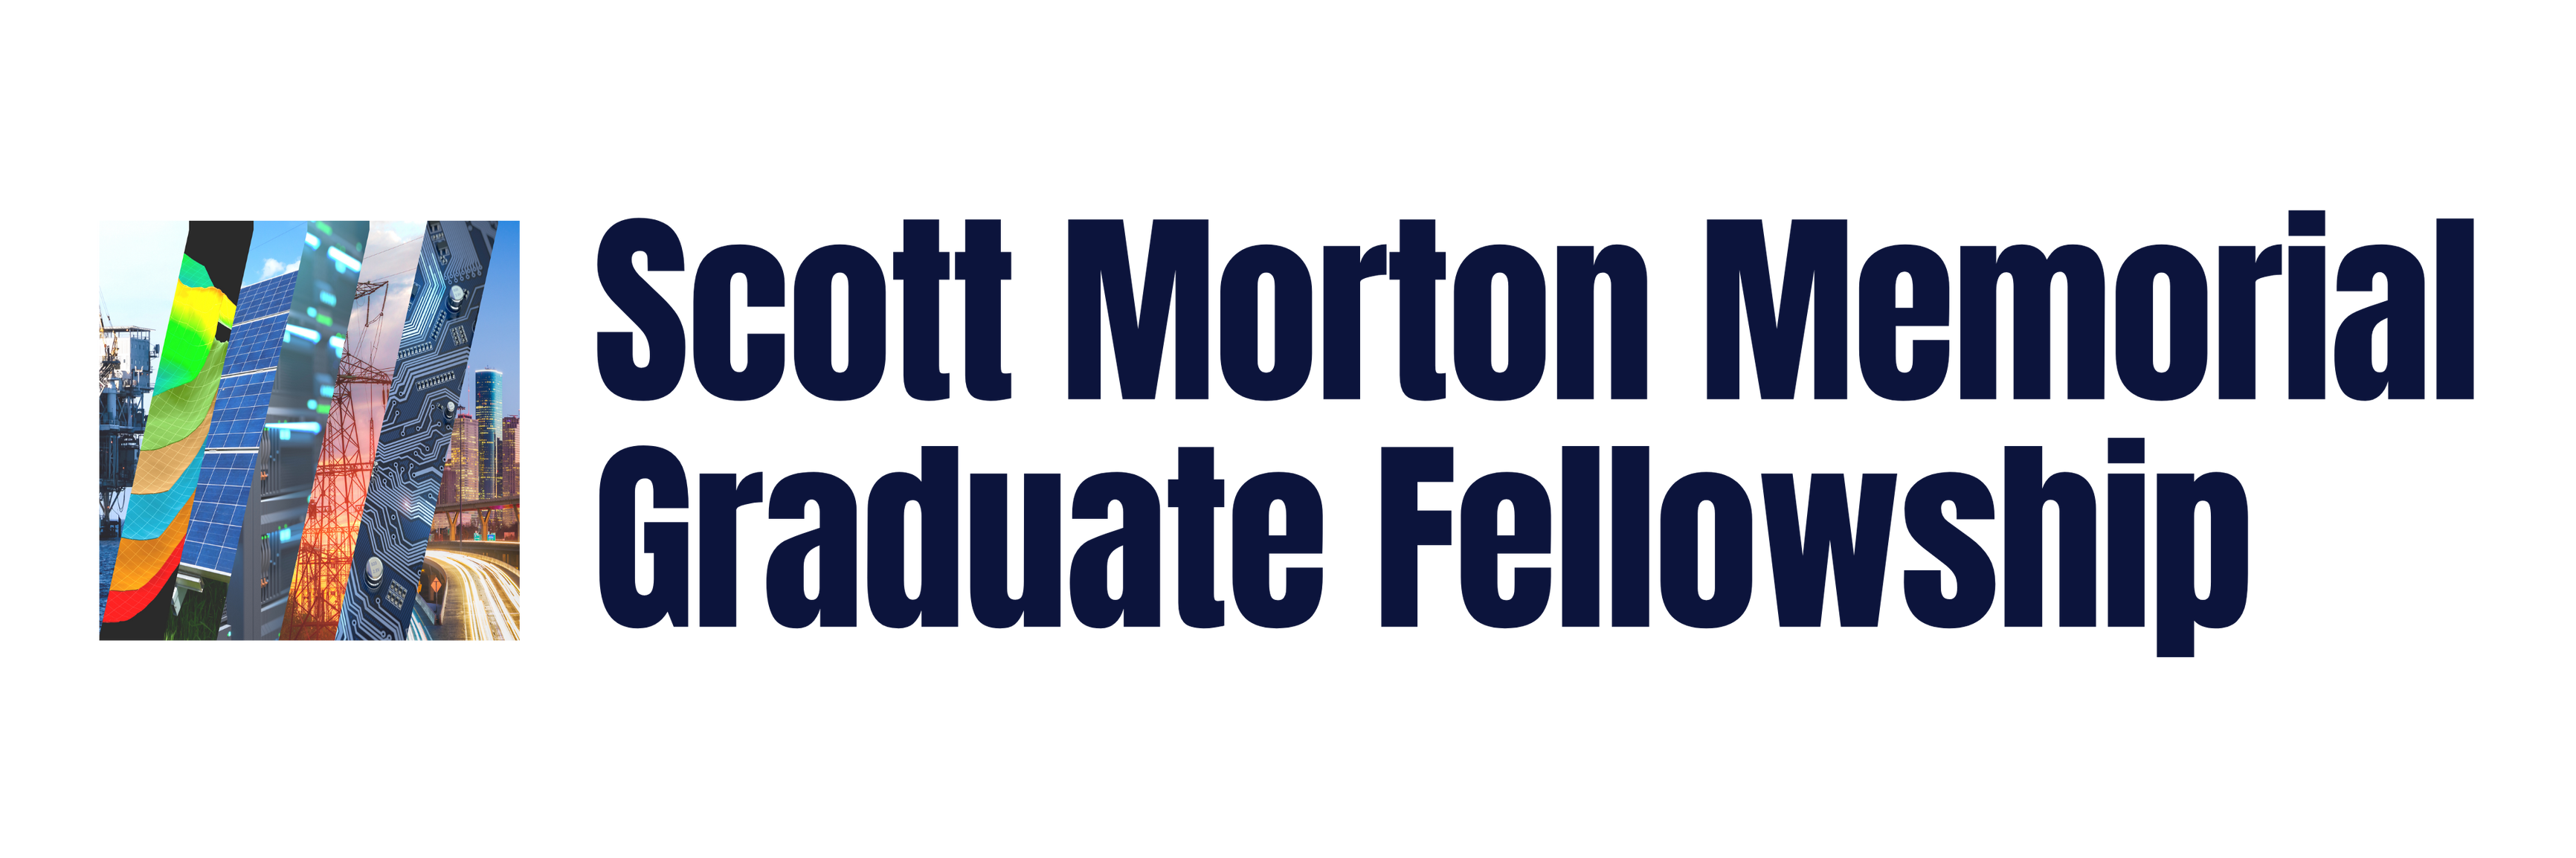 Scott Morton Fellowship